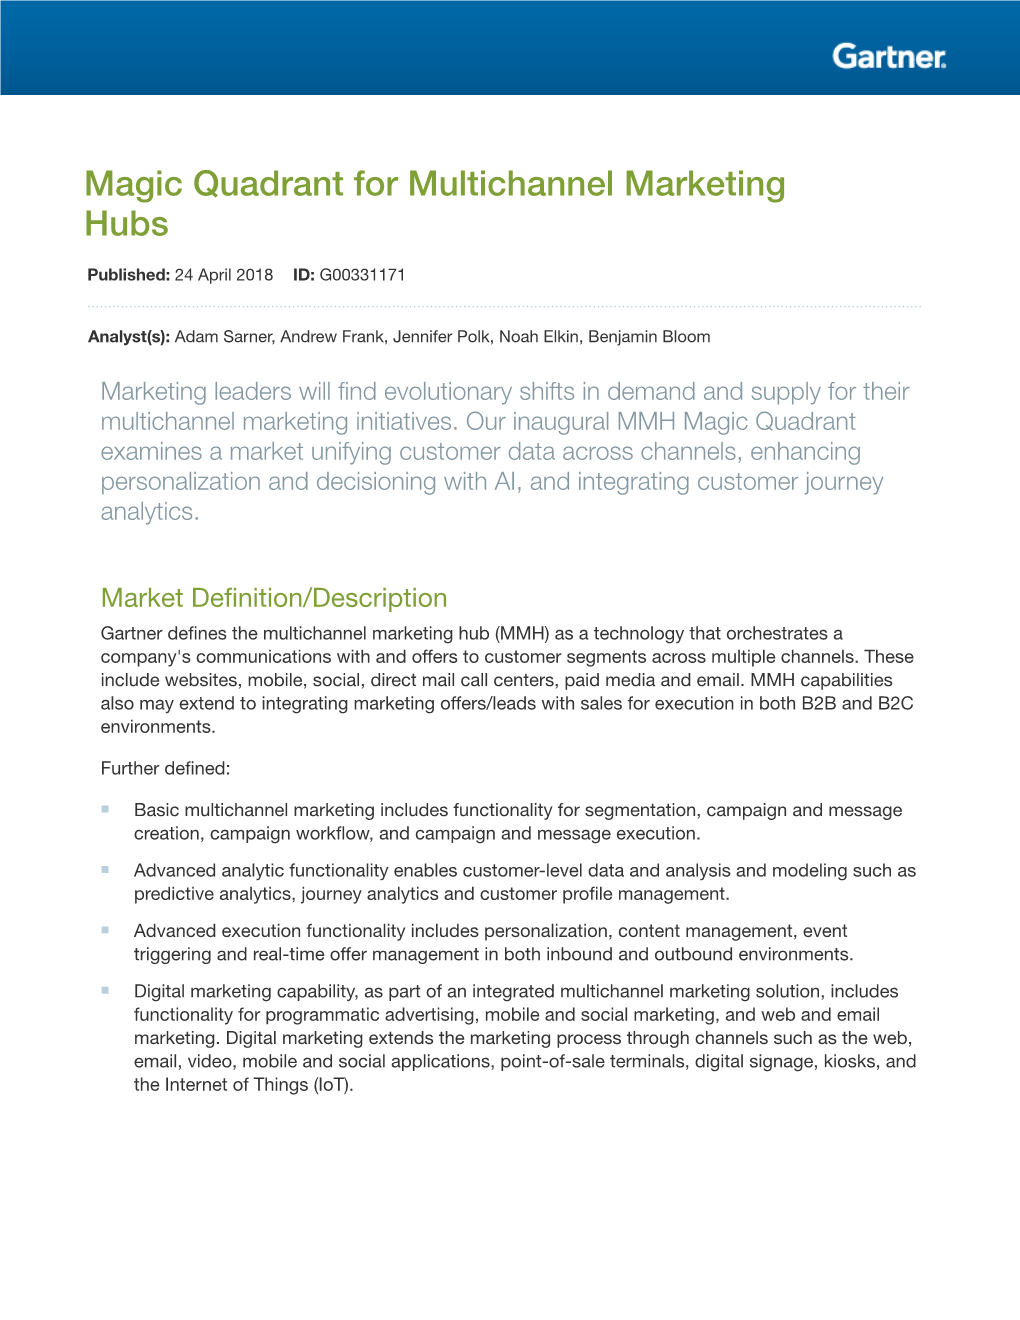 Magic Quadrant for Multichannel Marketing Hubs